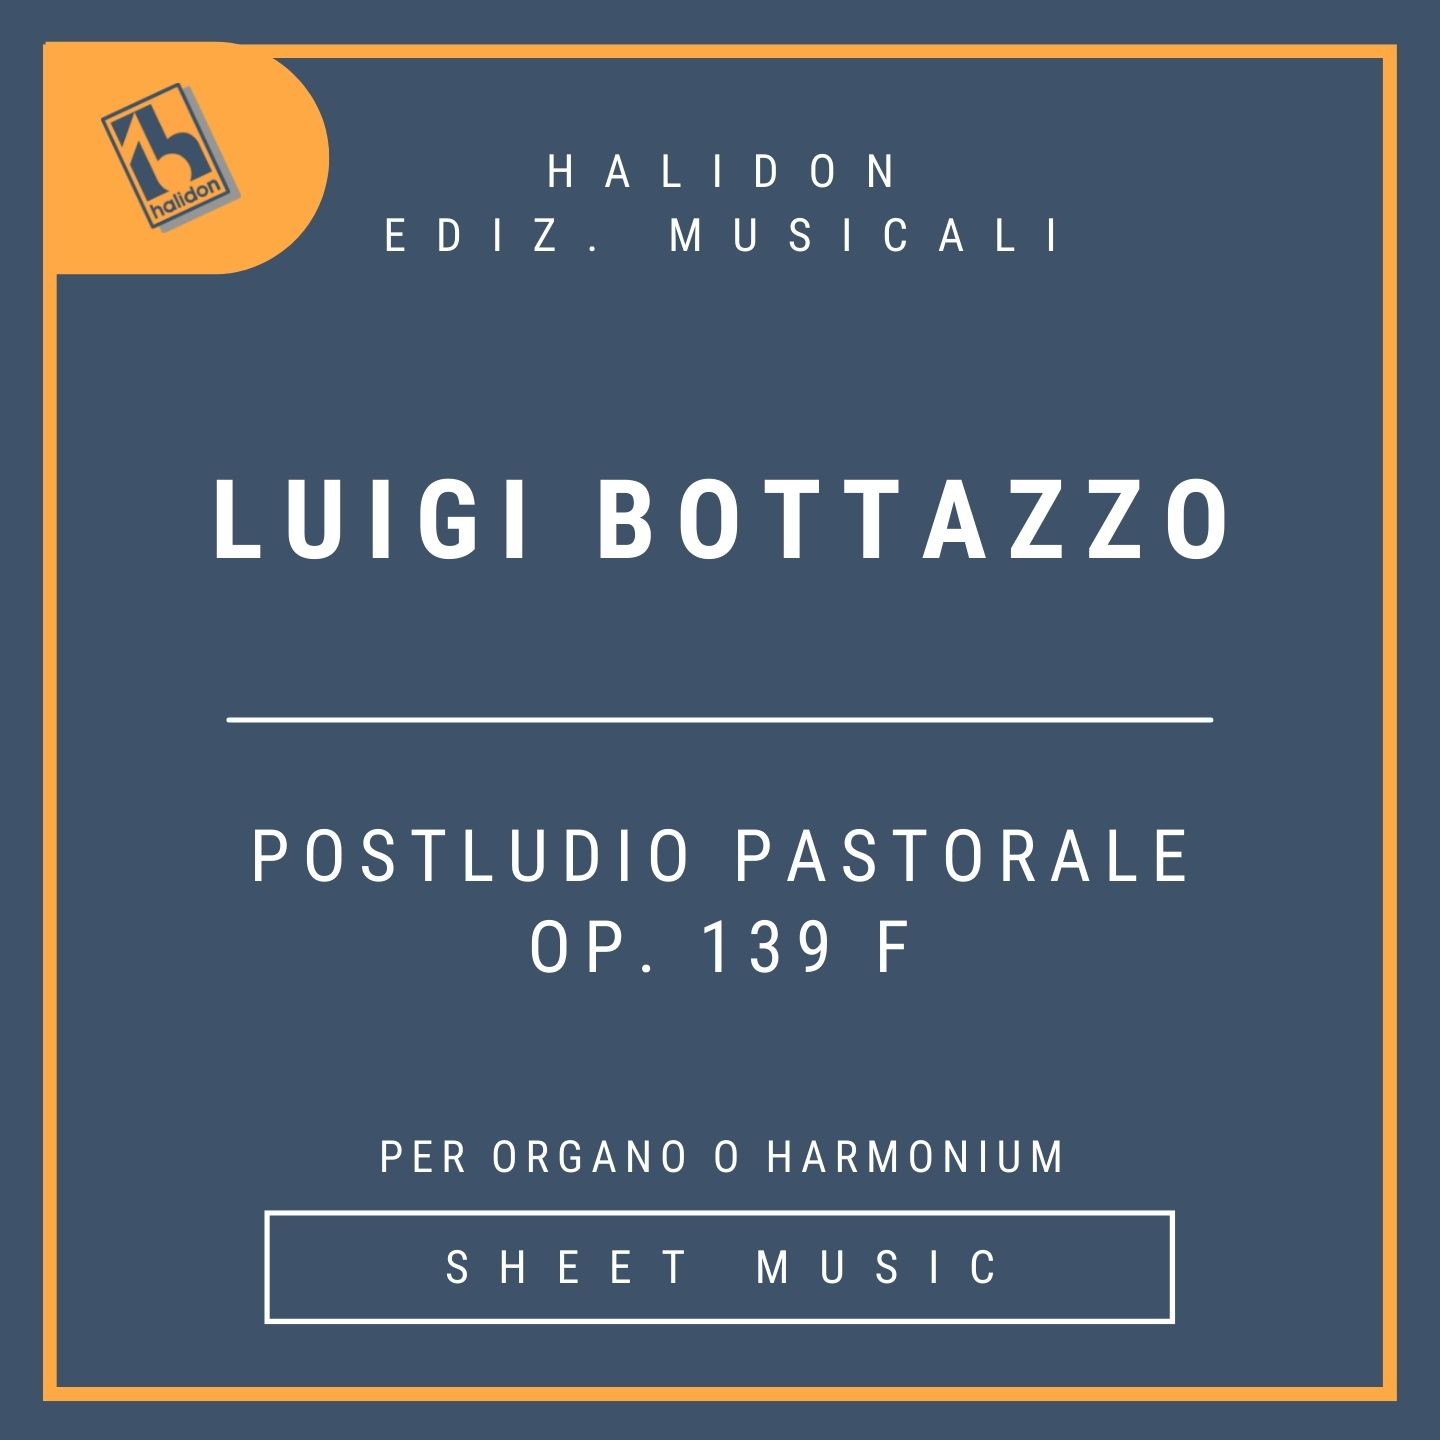 Luigi Bottazzo - Postludio pastorale per organo op. 139 f